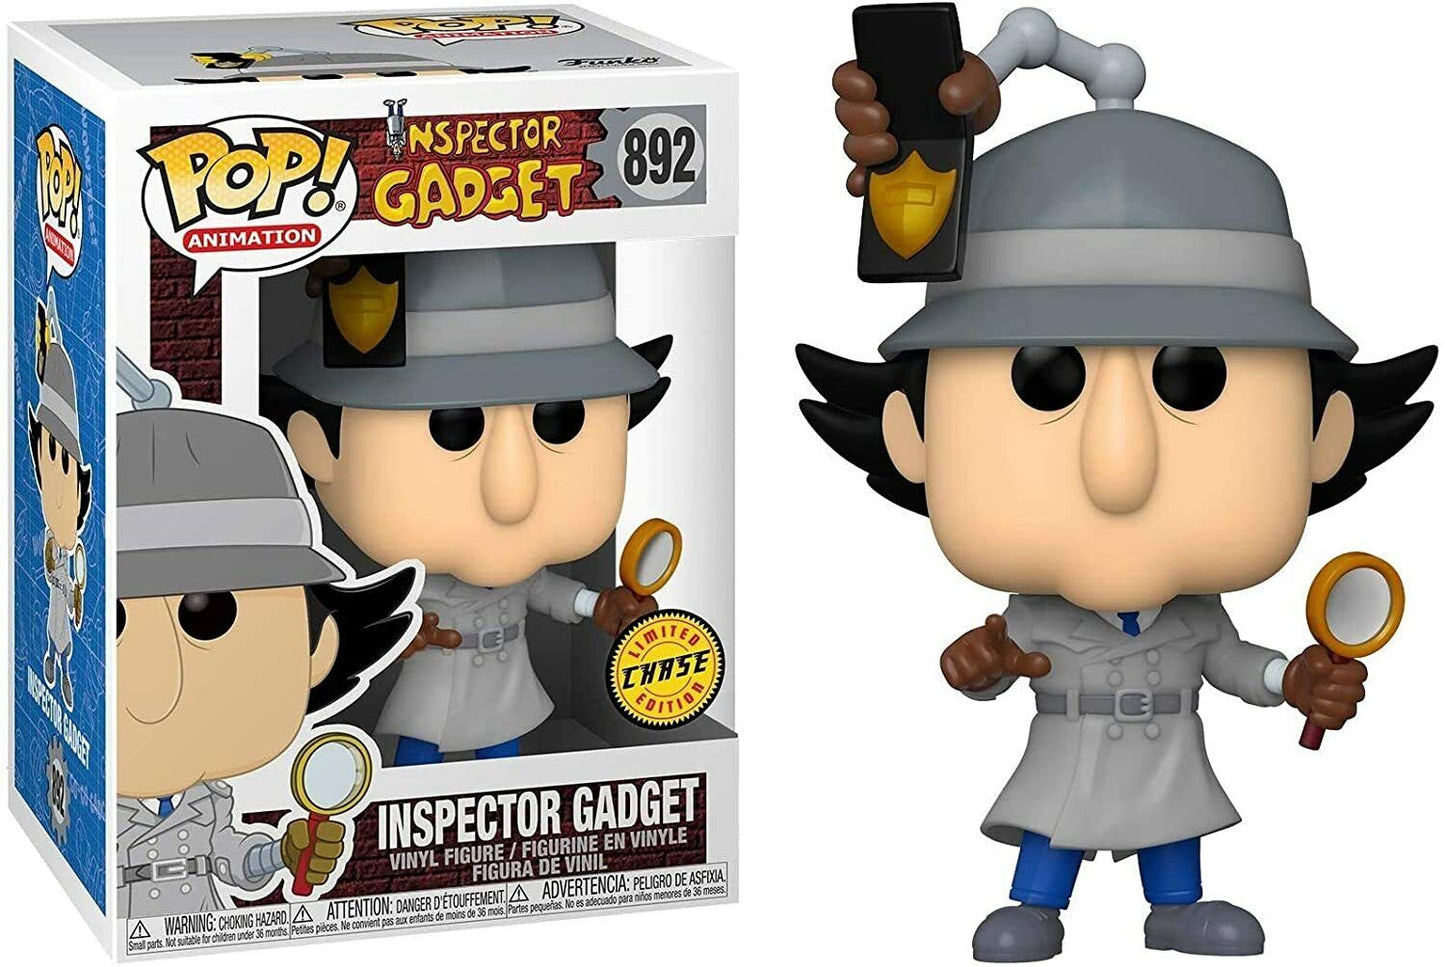 Inspecteur Gadget 892 Pop!